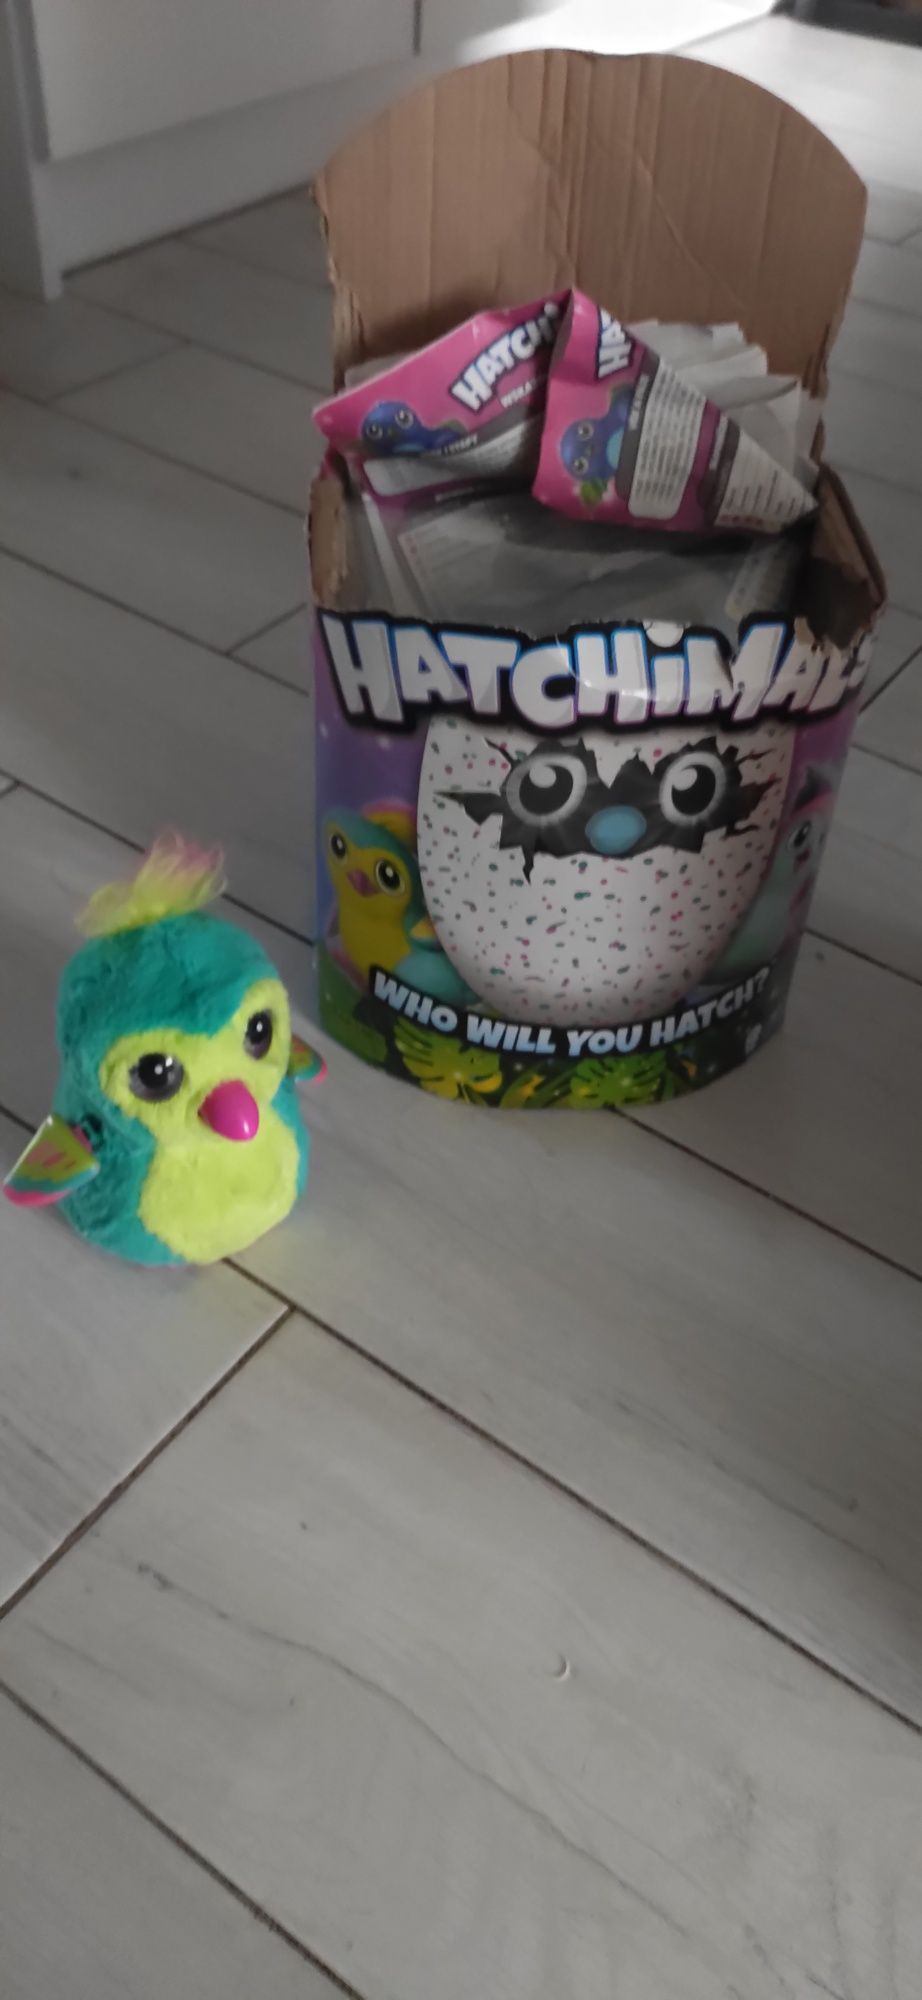 Hatchimals zabawka interaktywna